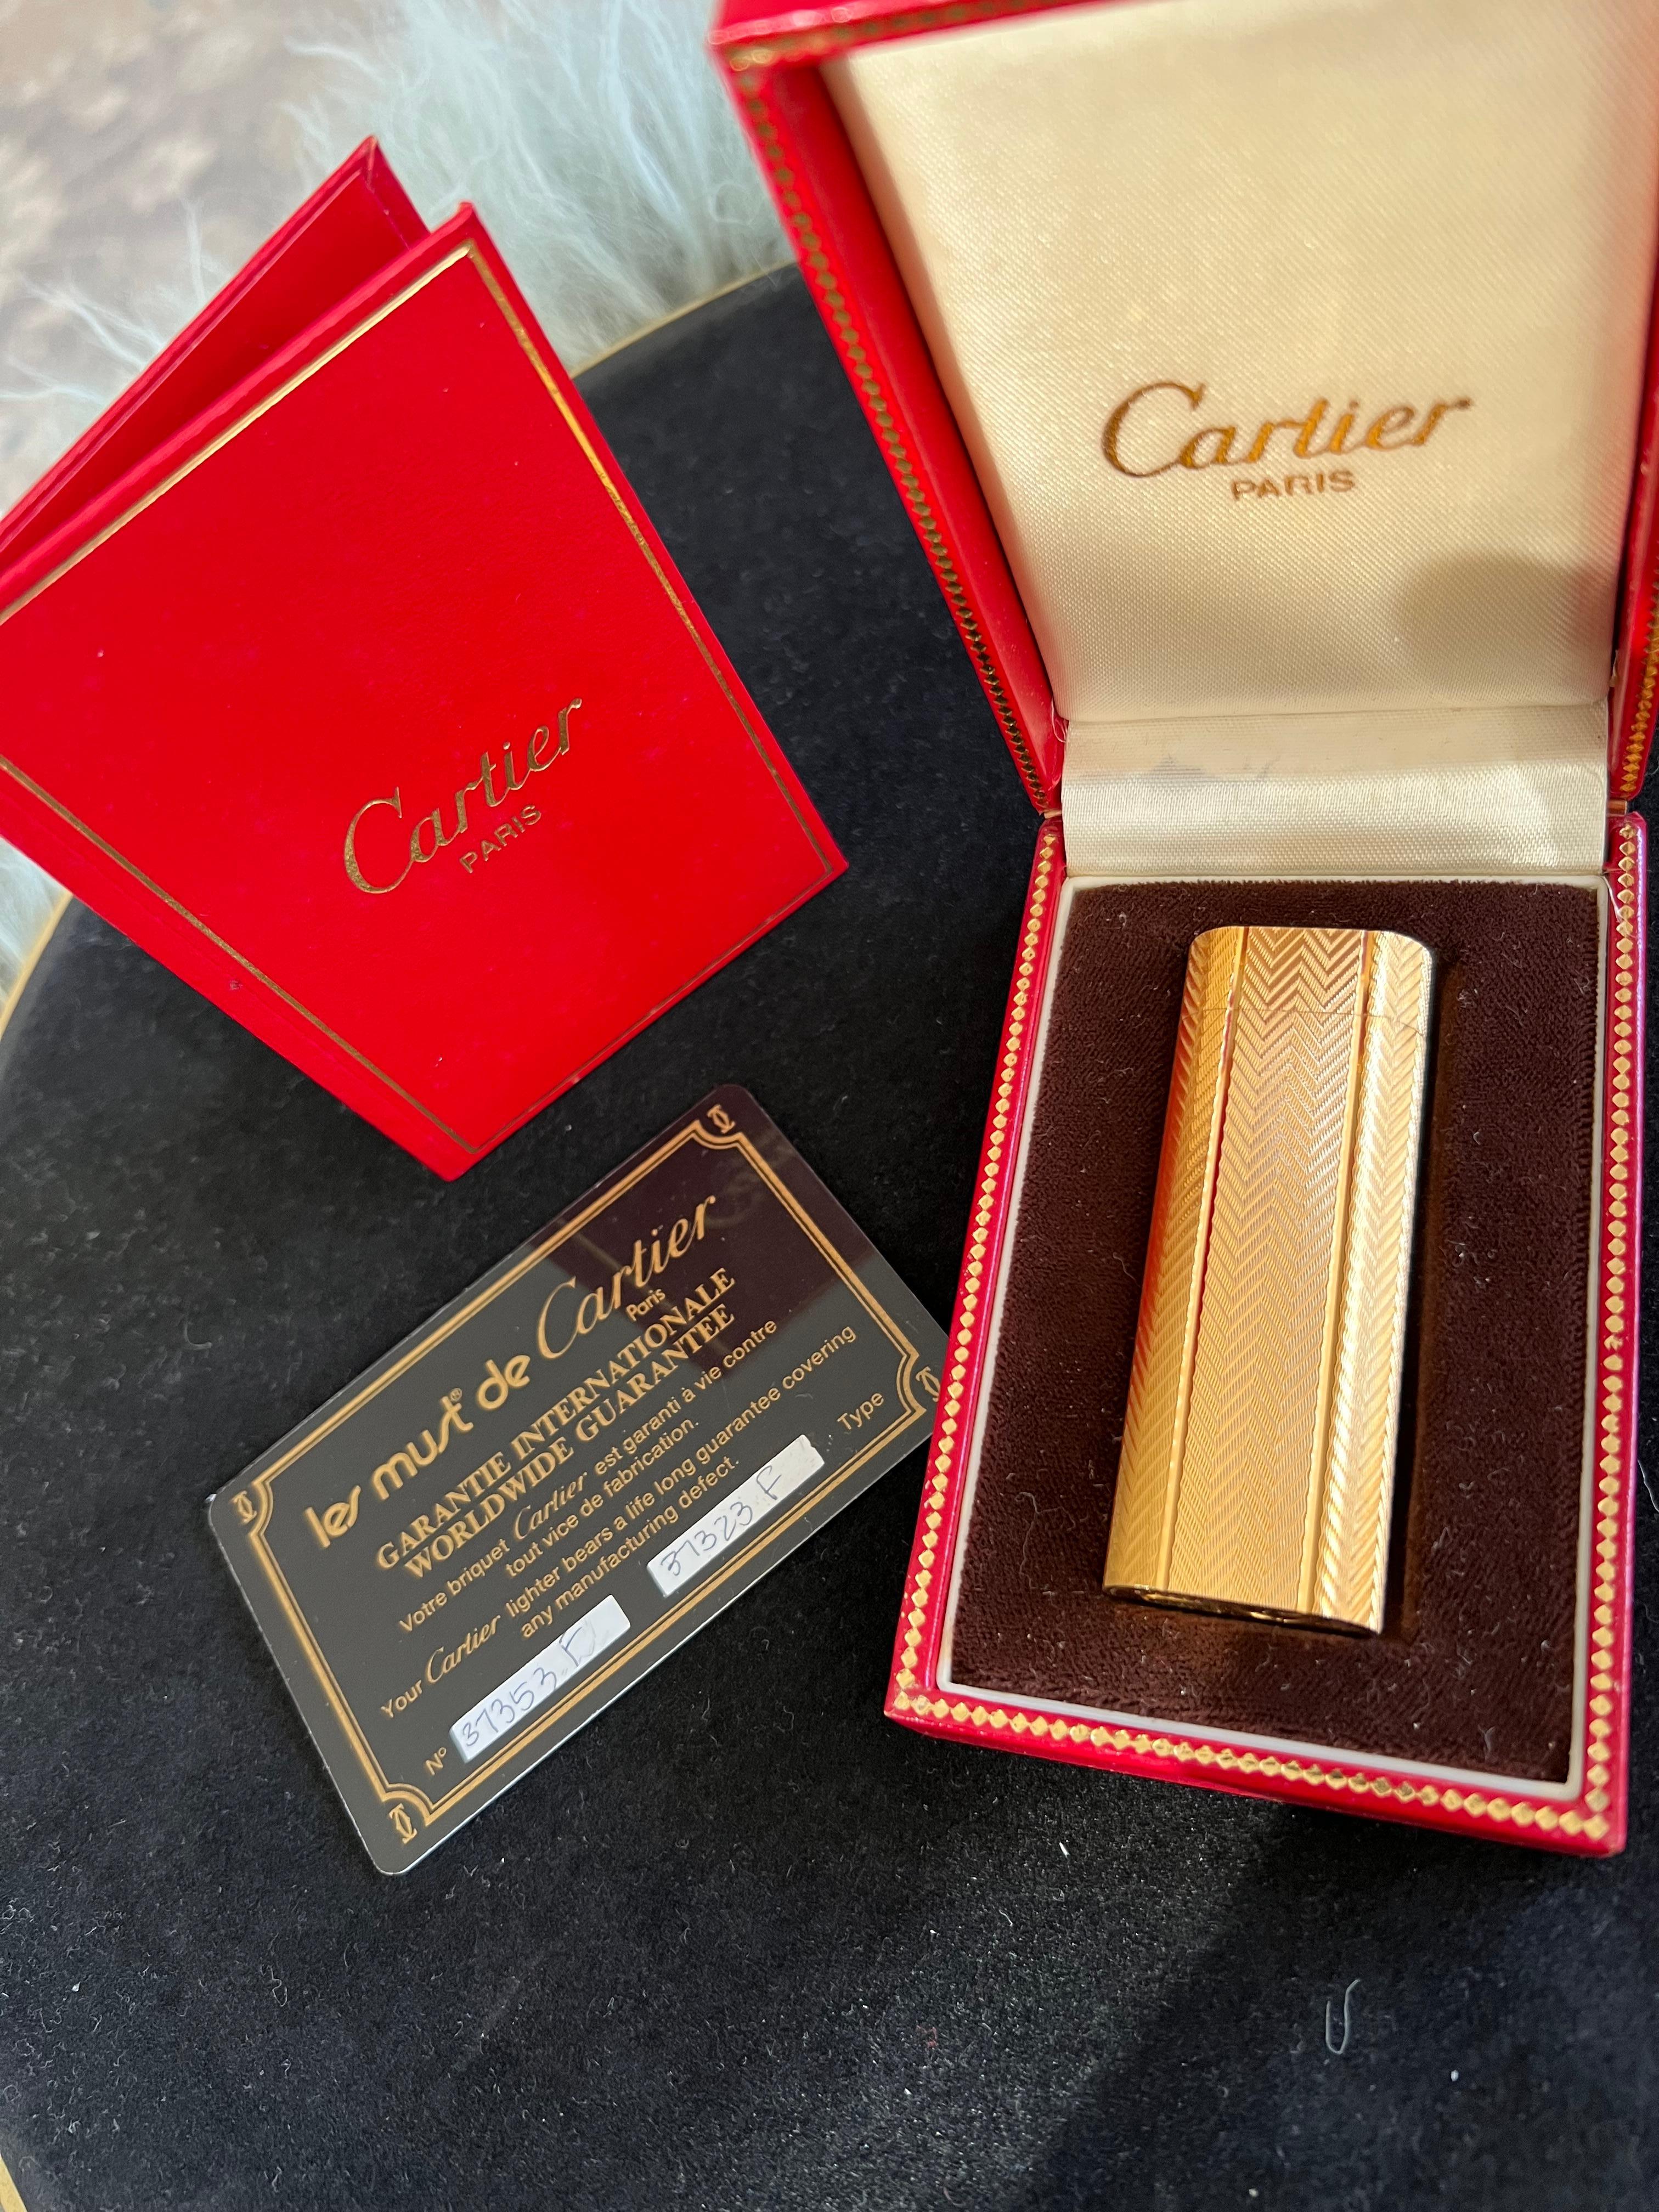 Les Must de Cartier Paris 18k Gold Plated Lighter 4